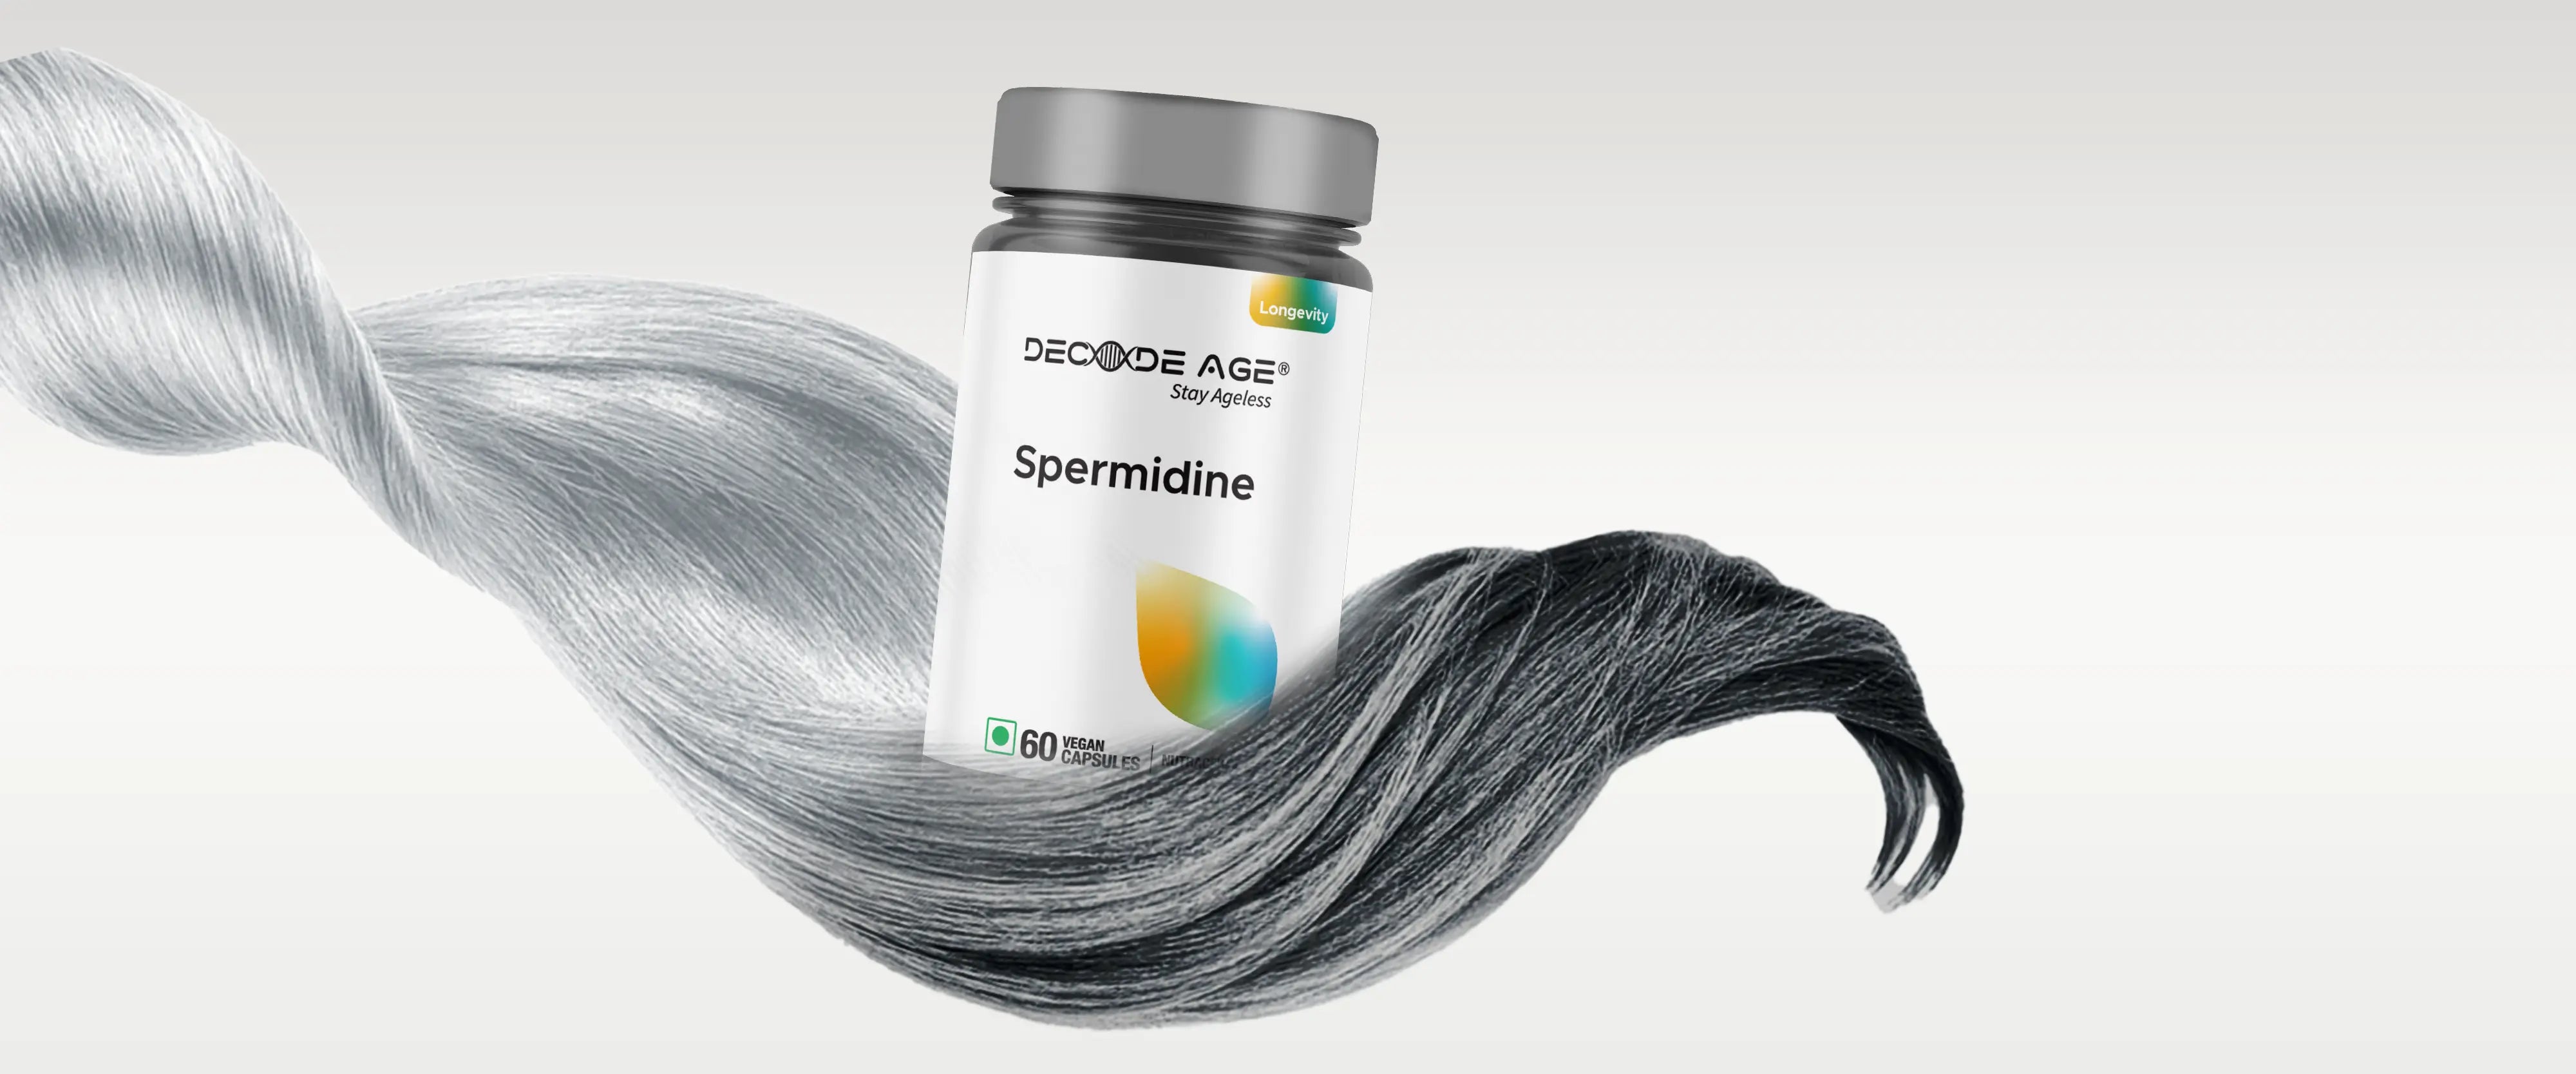 Reverse Grey Hair with Spermidine